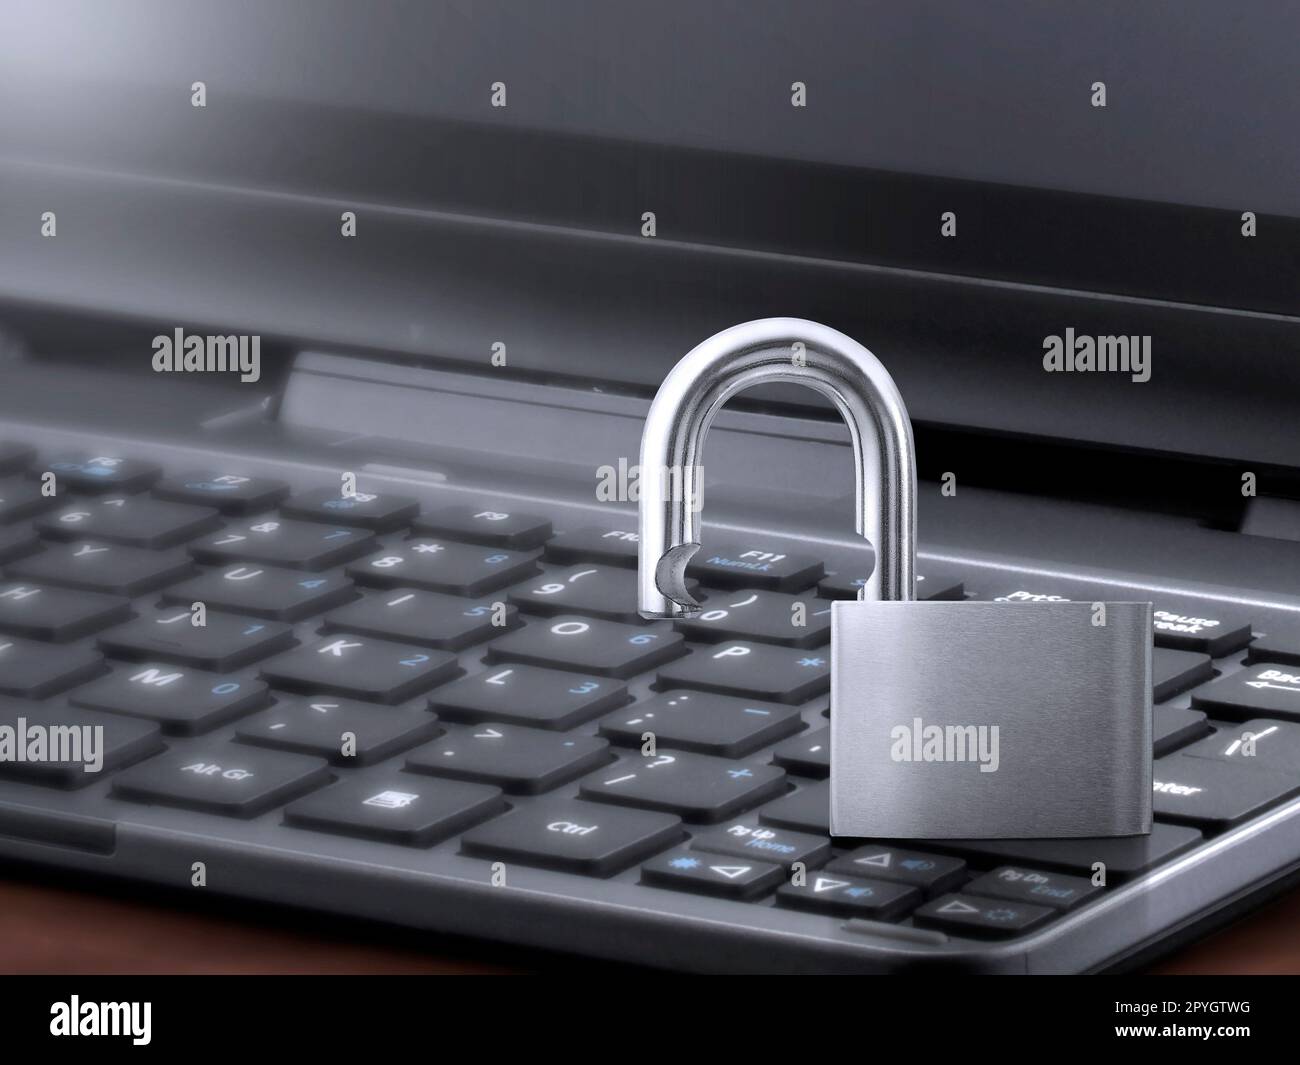 Computer security concept. Unlocked padlock on laptop keyboard. Stock Photo